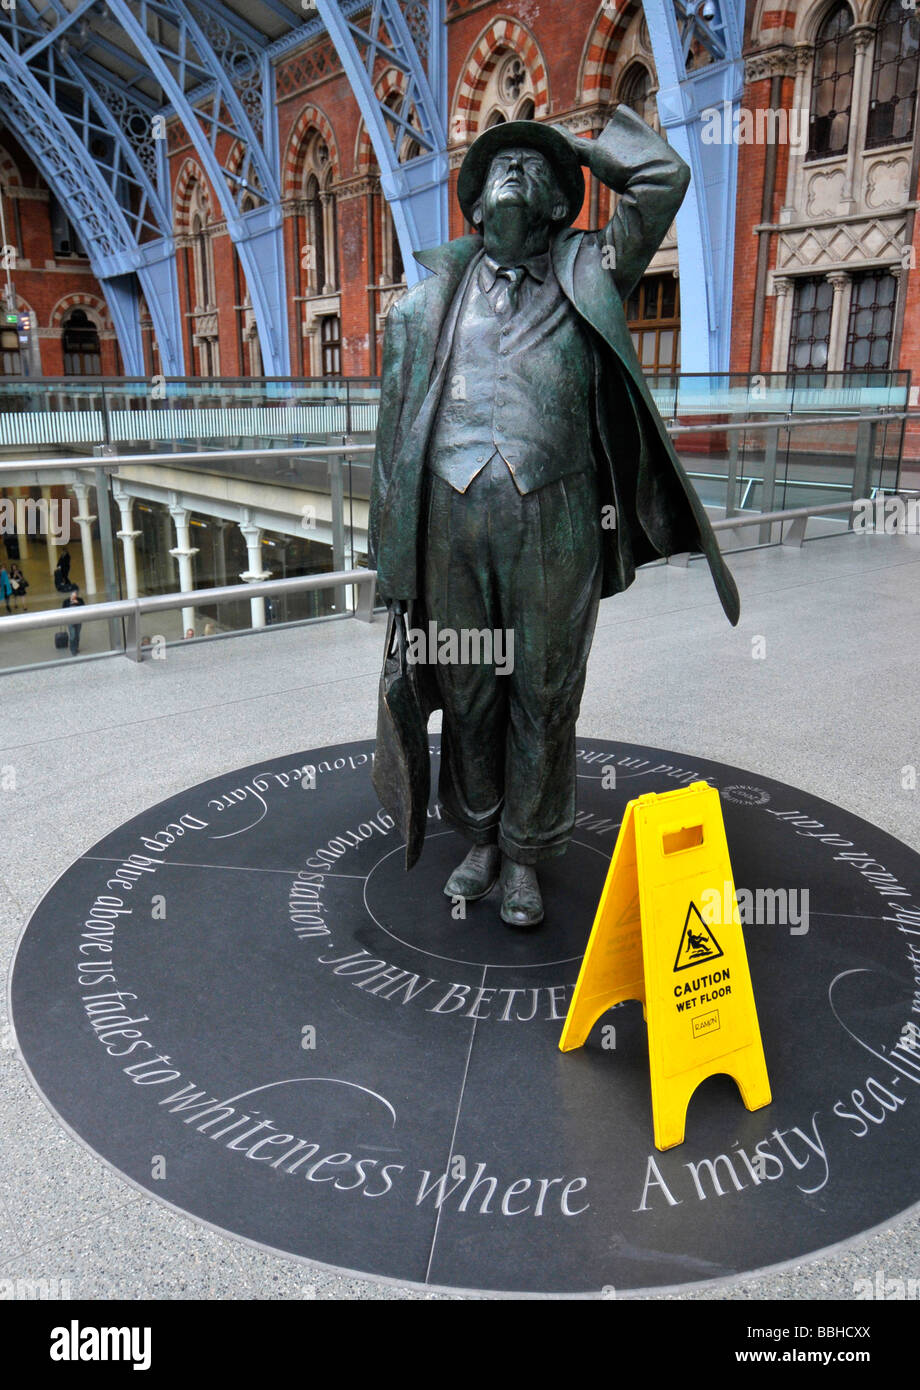 Statue of Sir John Betjeman with wet floor warning sign, St Pancras Train Station, London, Britain, UK Stock Photo